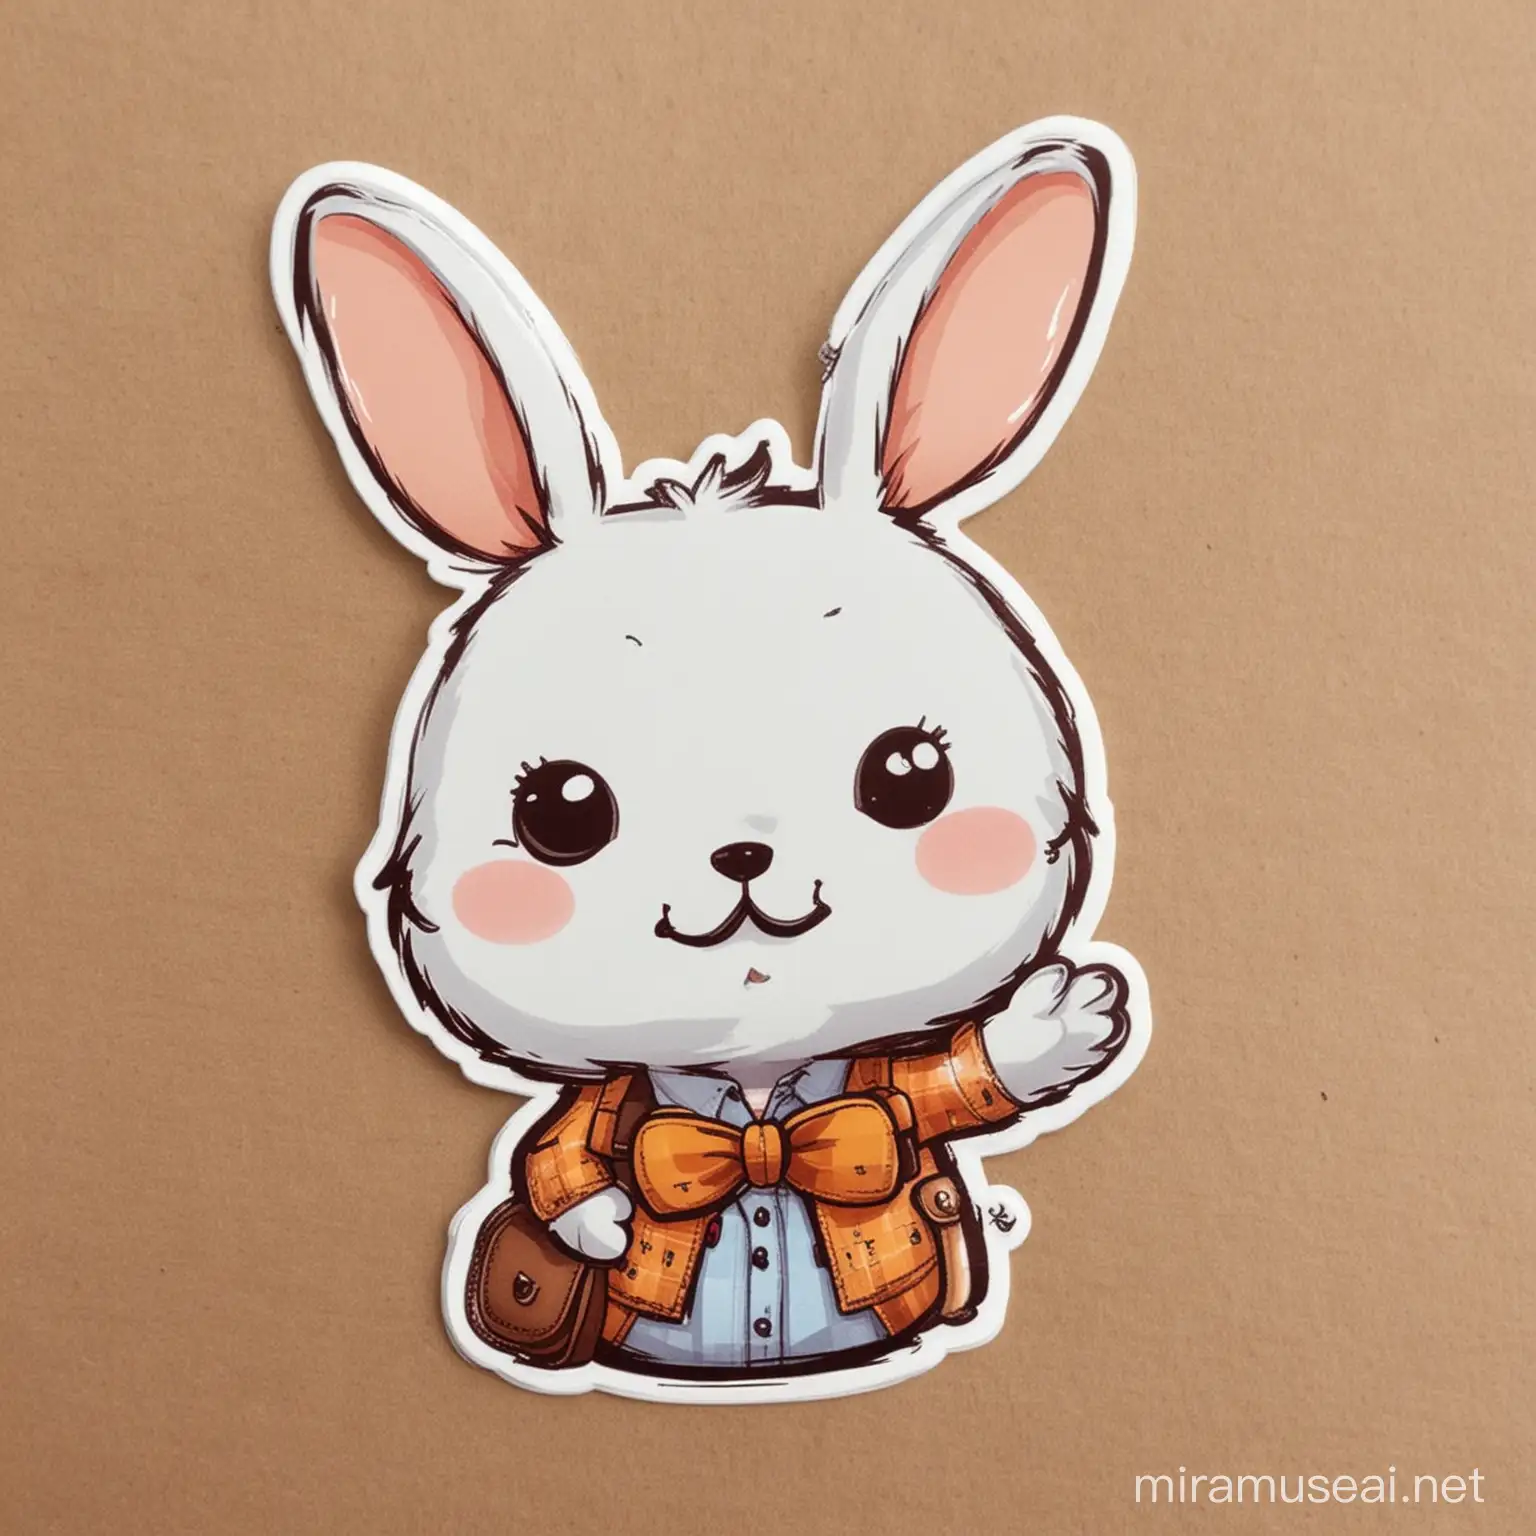 Cartoon Rabbit Teacher Sticker for Classroom Decoration